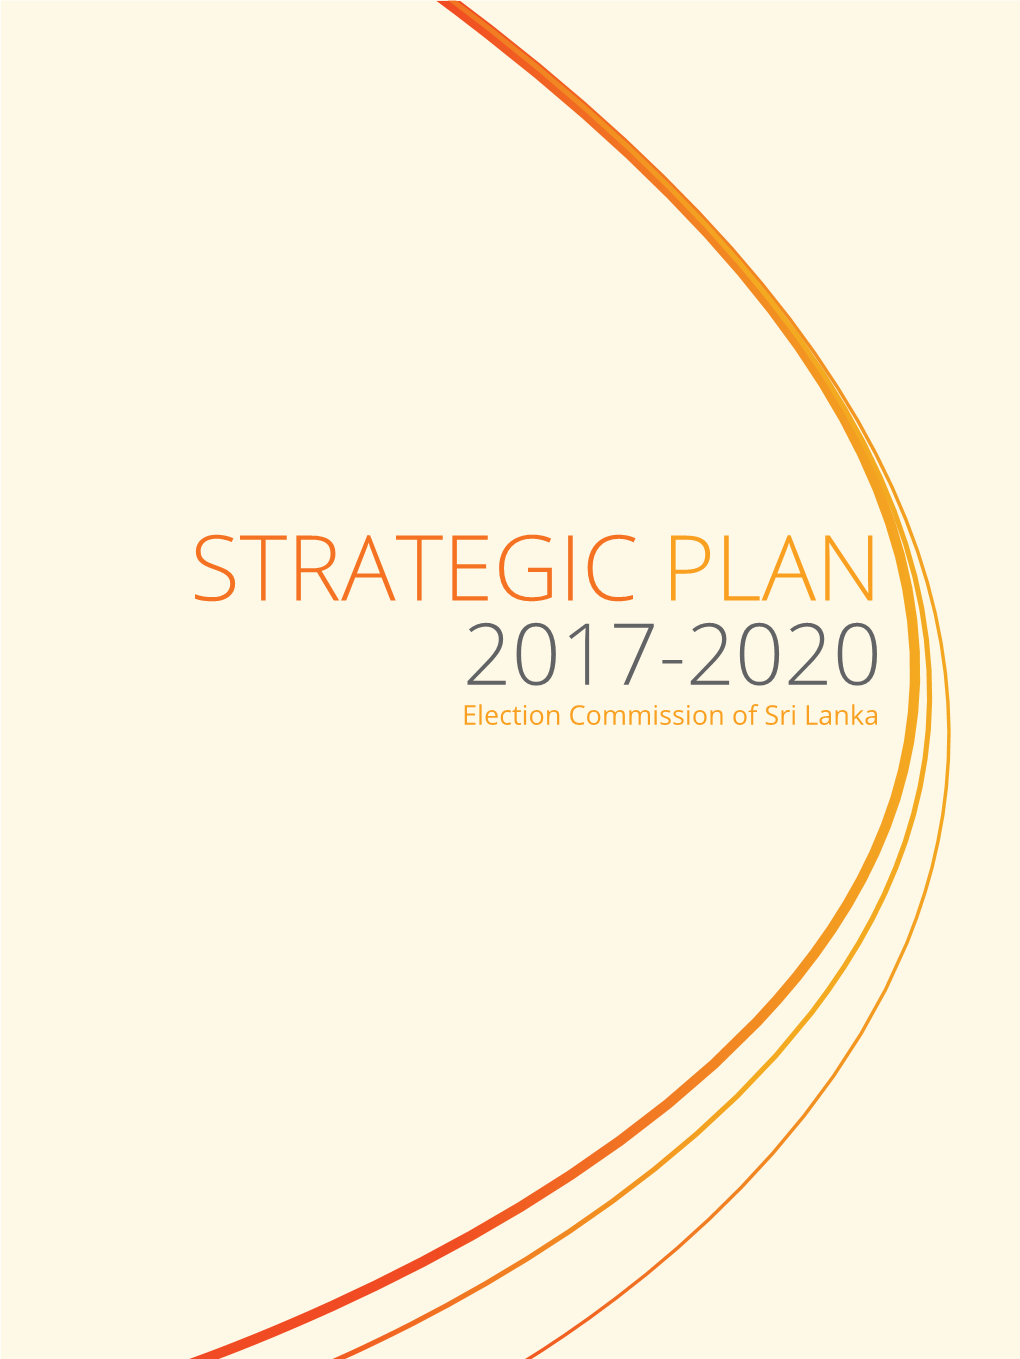 STRATEGIC PLAN 2017-2020 Election Commission of Sri Lanka Participatory Strategic Plan (PSP) of the Election Commission of Sri Lanka for 2017-2020